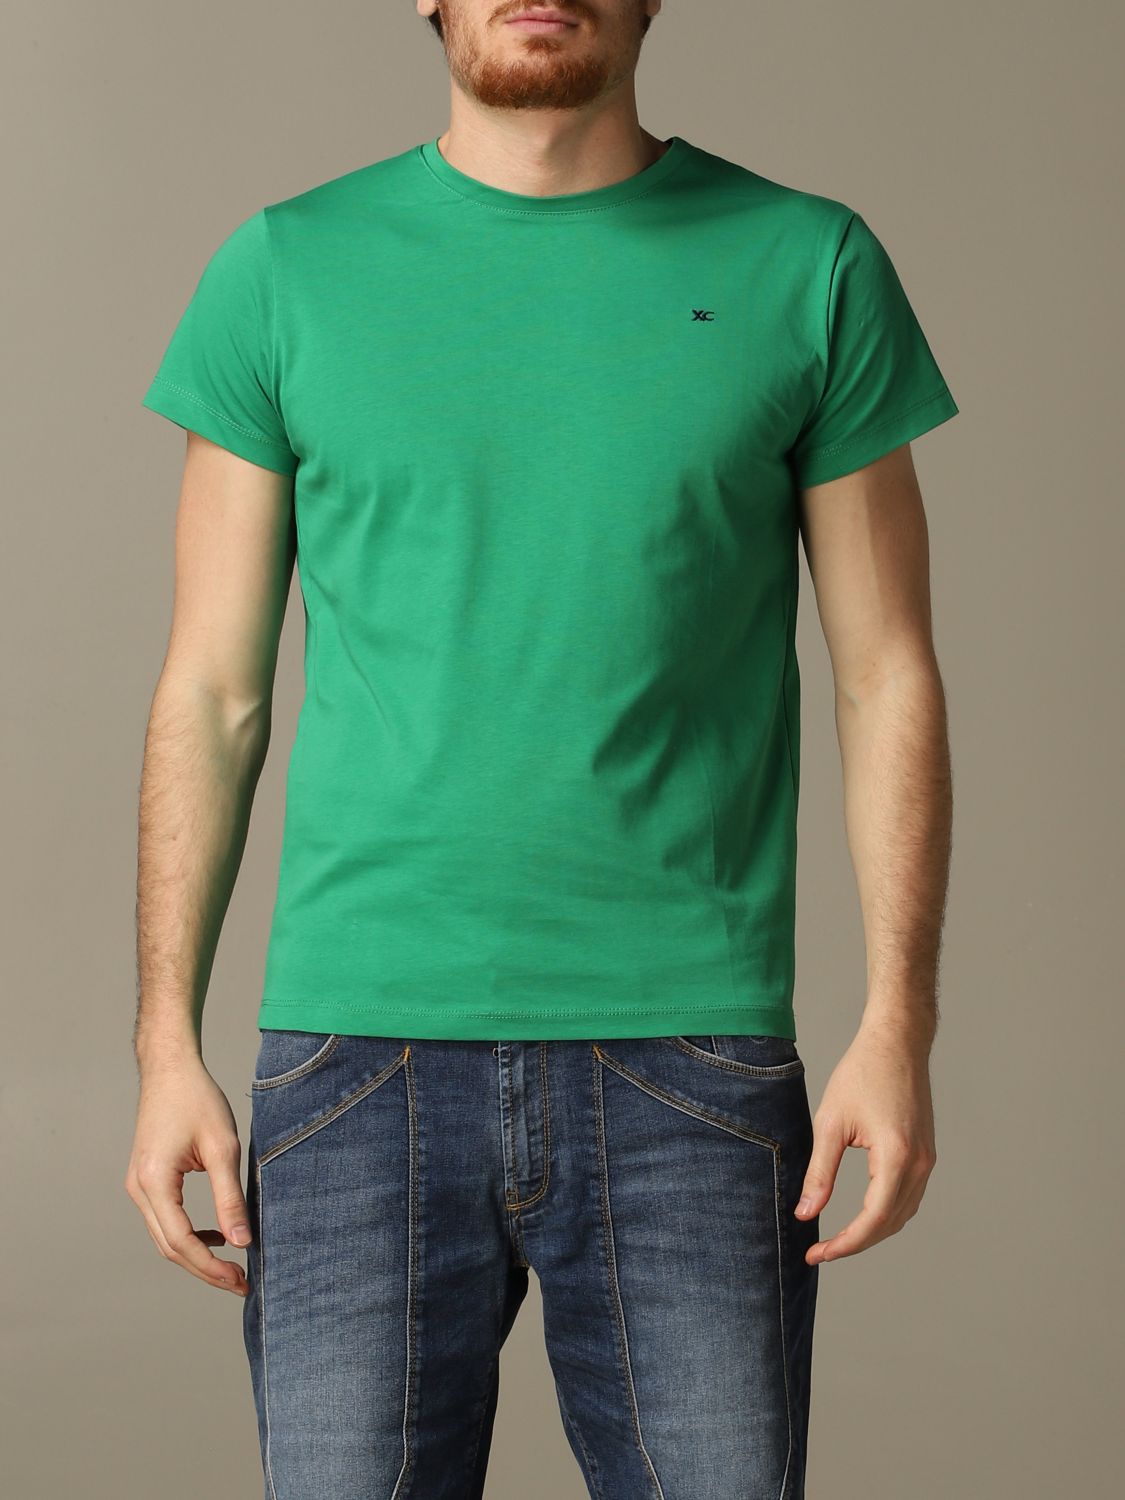 Xc T-Shirt XC Men colour Green